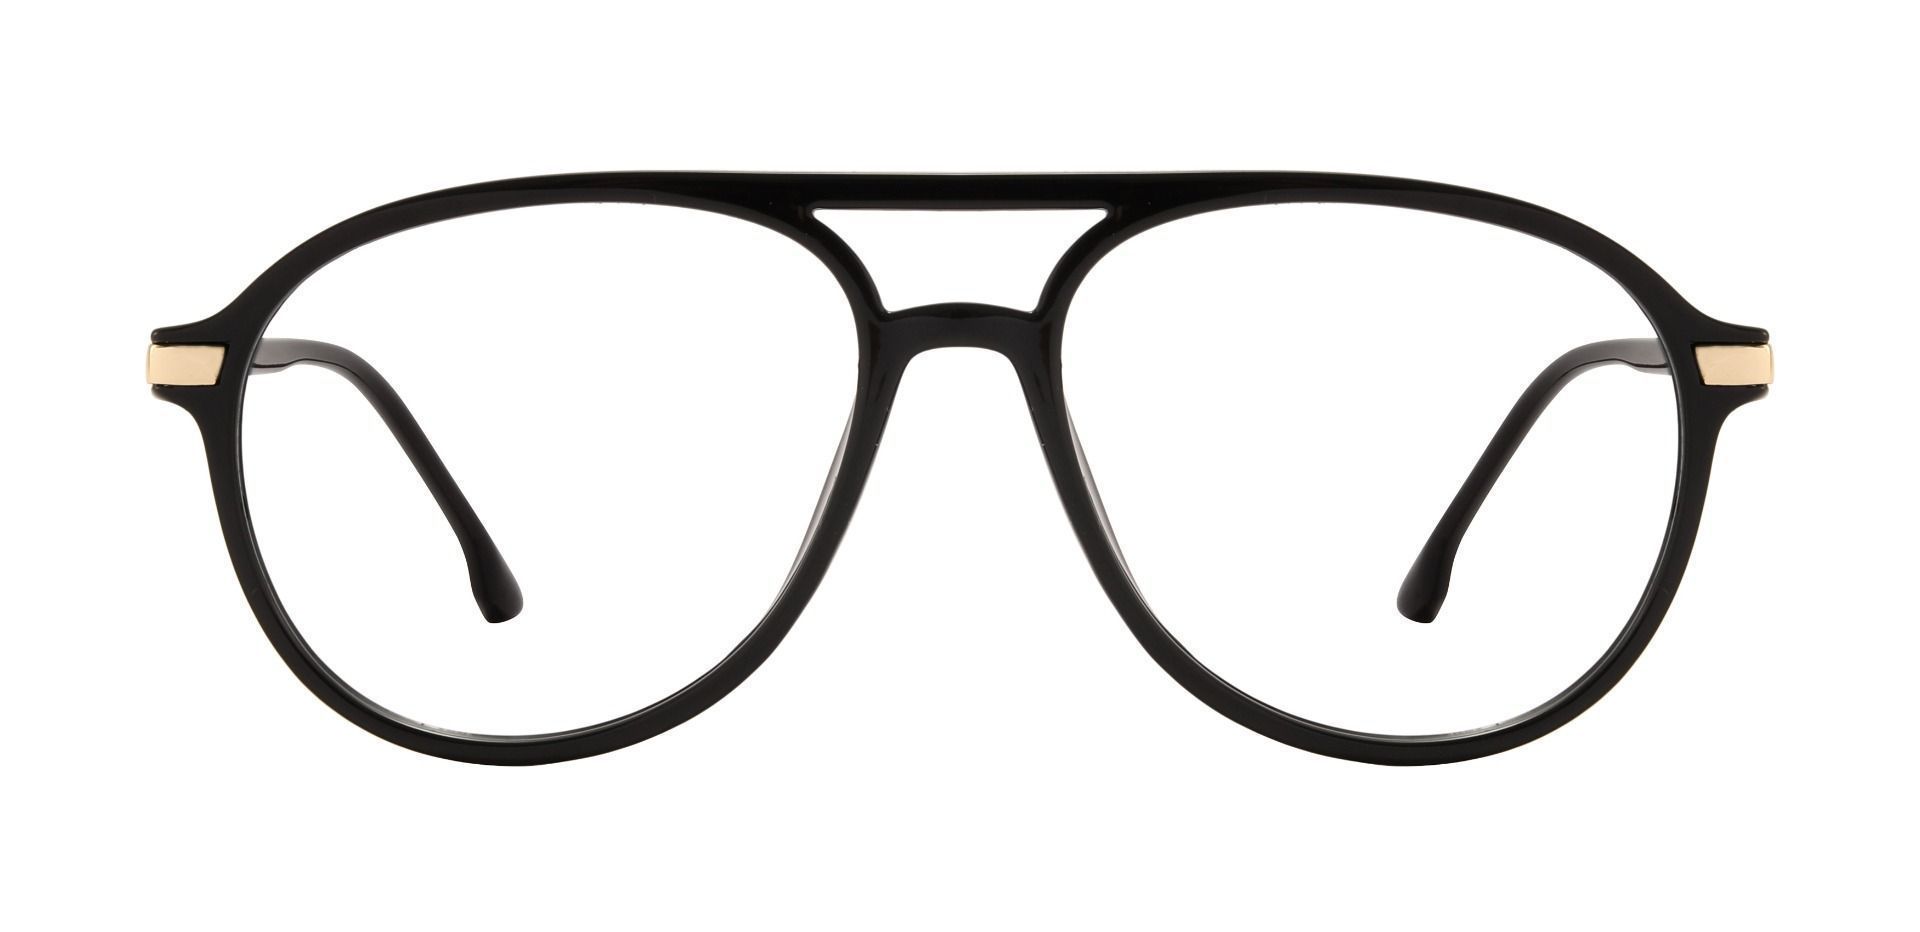 Bigelow Aviator Prescription Glasses - Black | Women's Eyeglasses ...